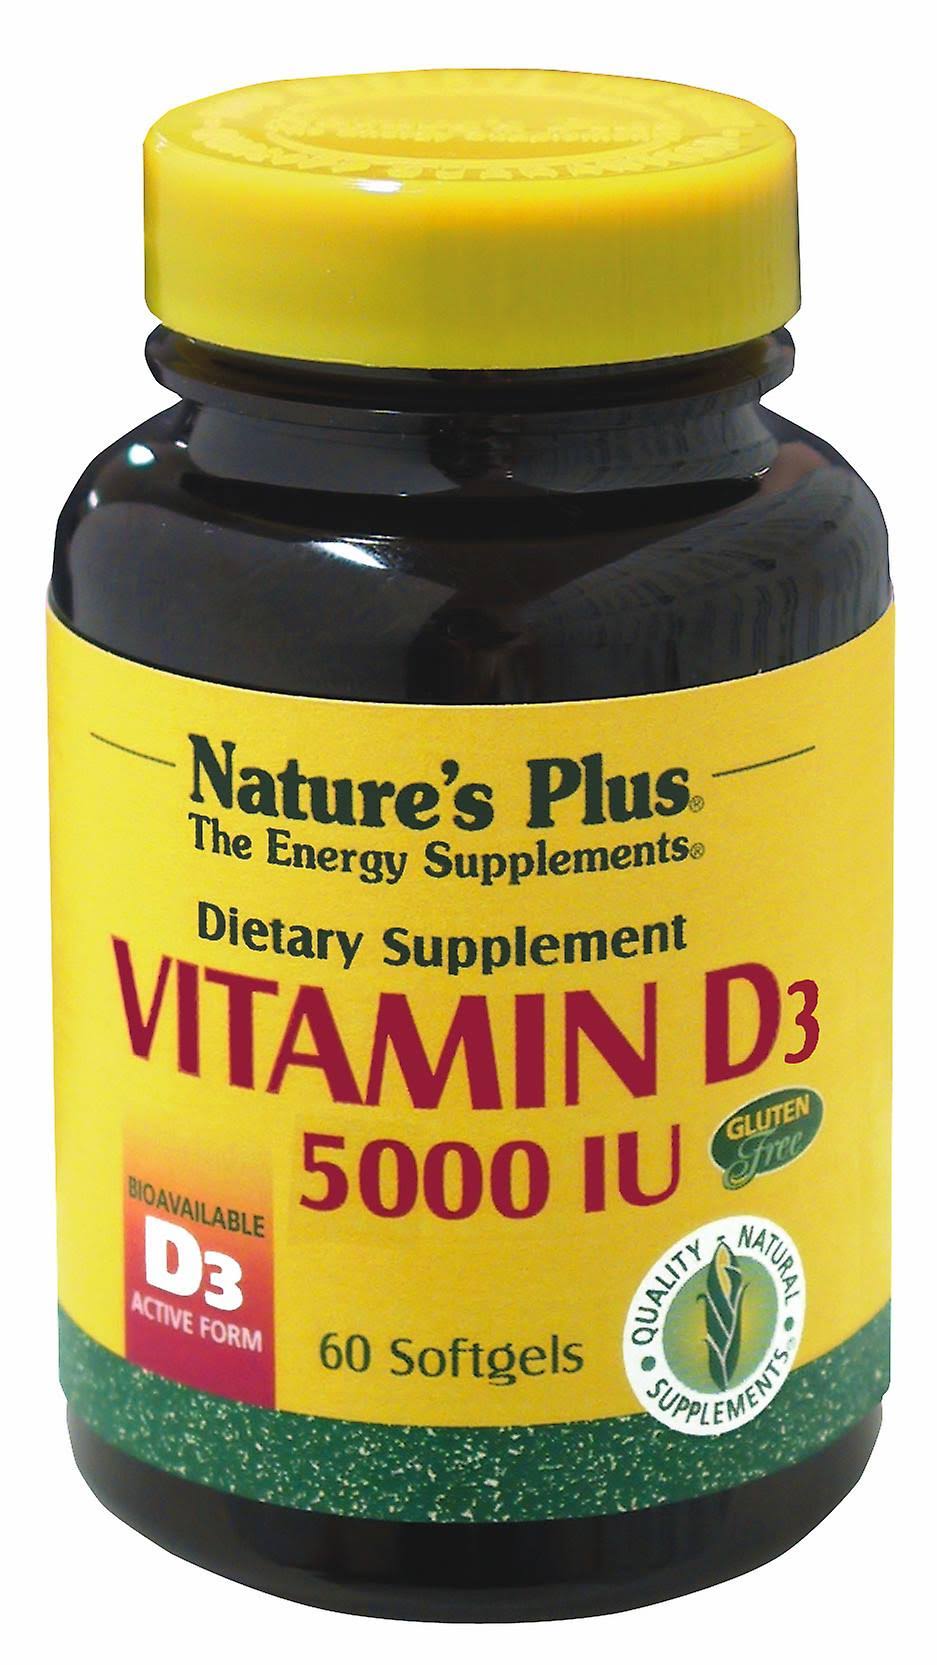 Natures plus витамины. Vitamin d3 2500 IU. Vitamin d3 5000 IU Bluebonnet. Железо витамины натурес. Витамины железо в капсулах.